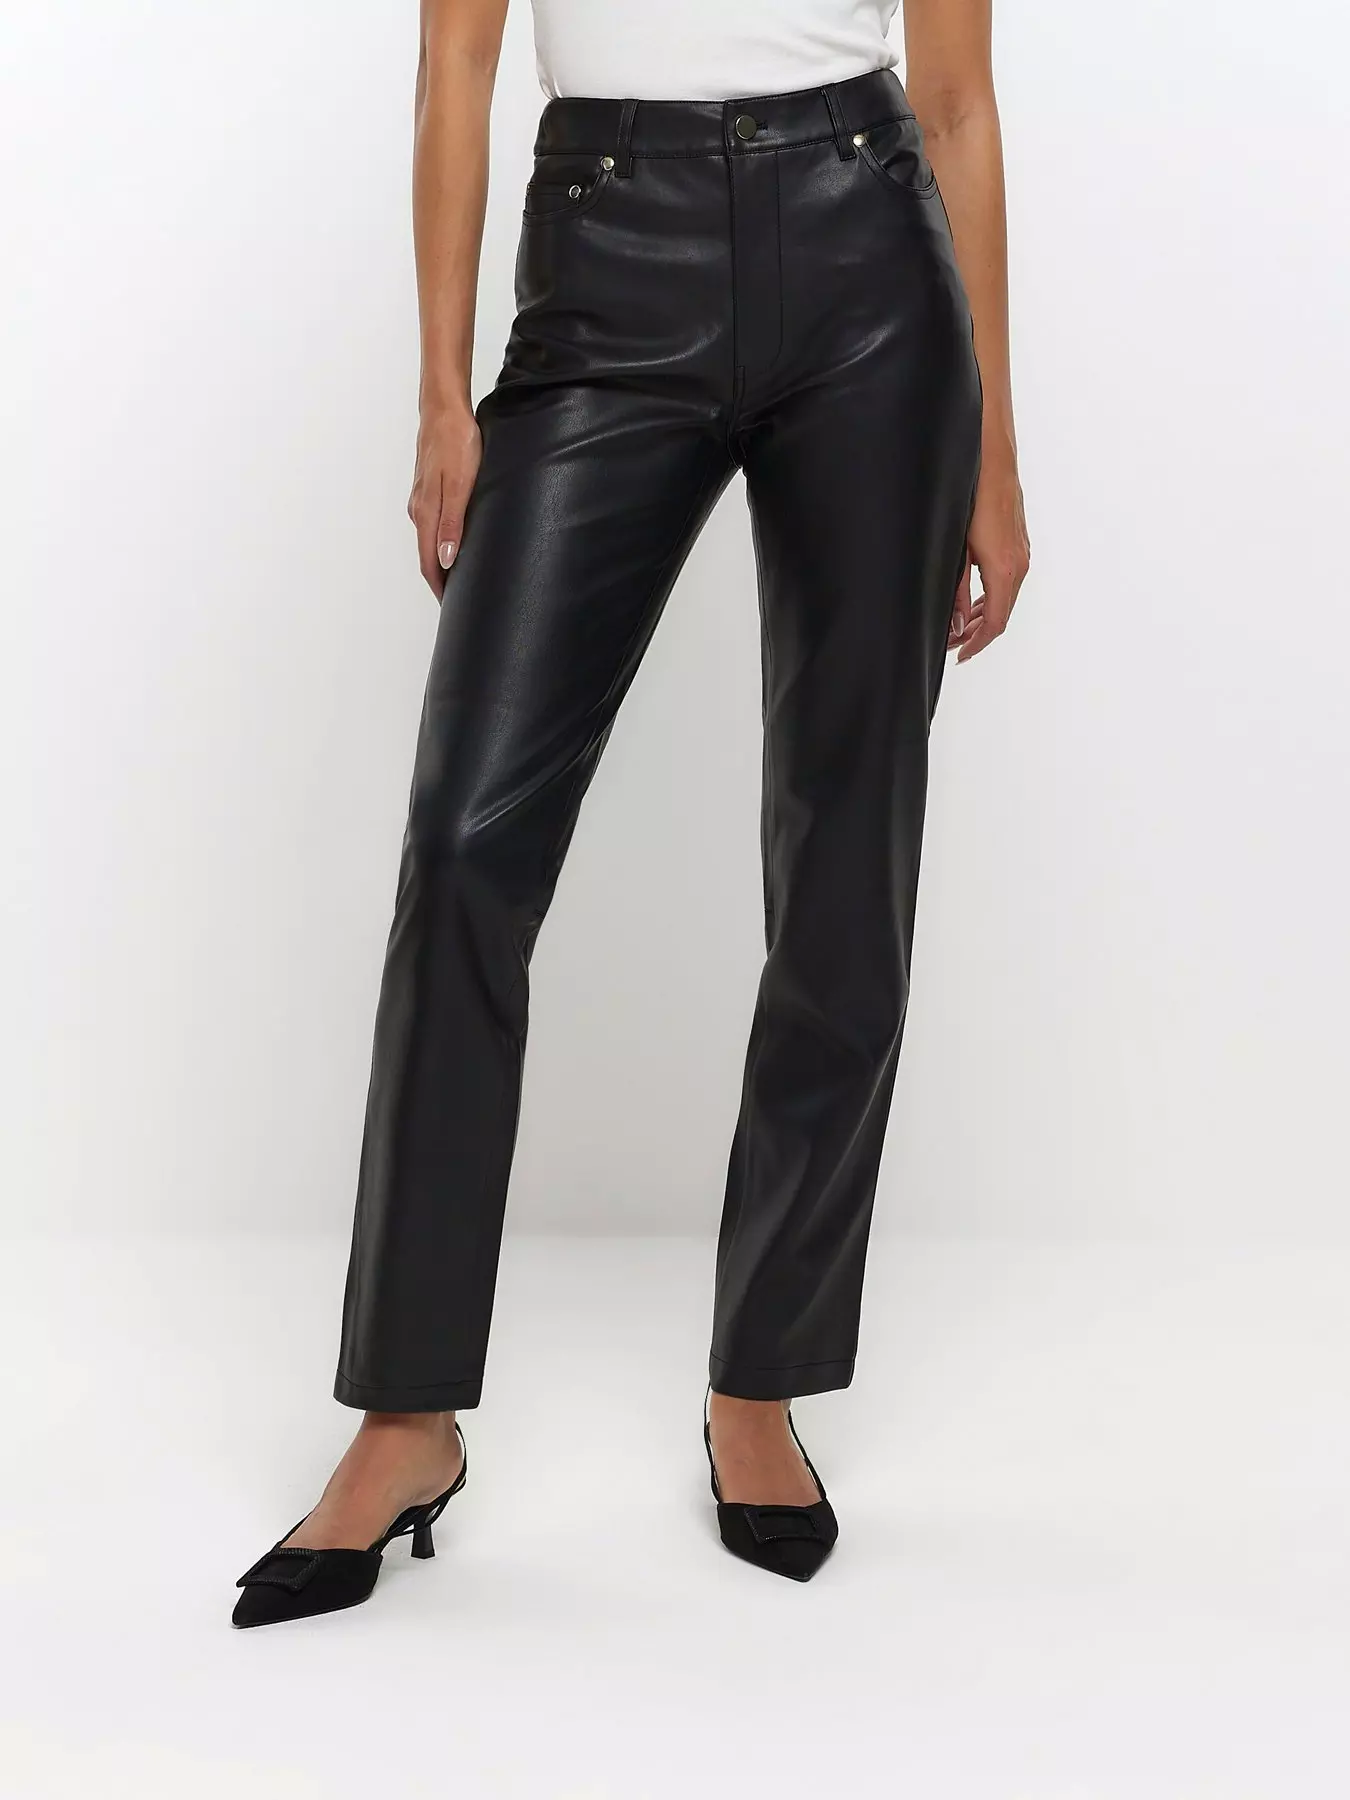 $89 Dkny Women's Black High Rise Two Button Tab Ankle Trouser Pants Size 12